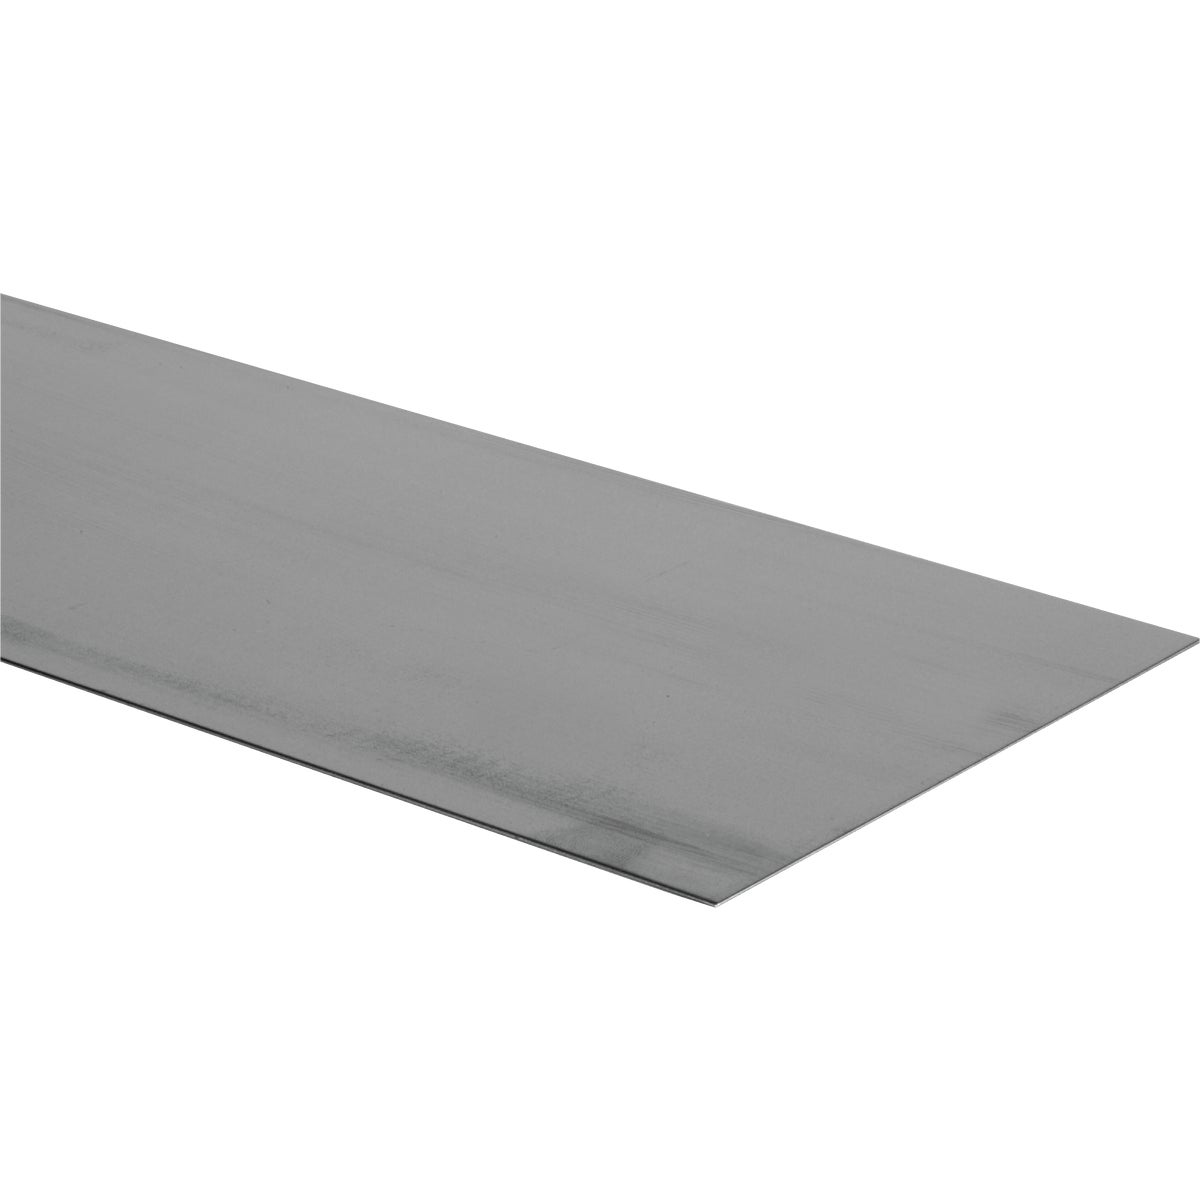 Item 721462, Solid plain metal sheets have applications for gutter repair, auto repair, 